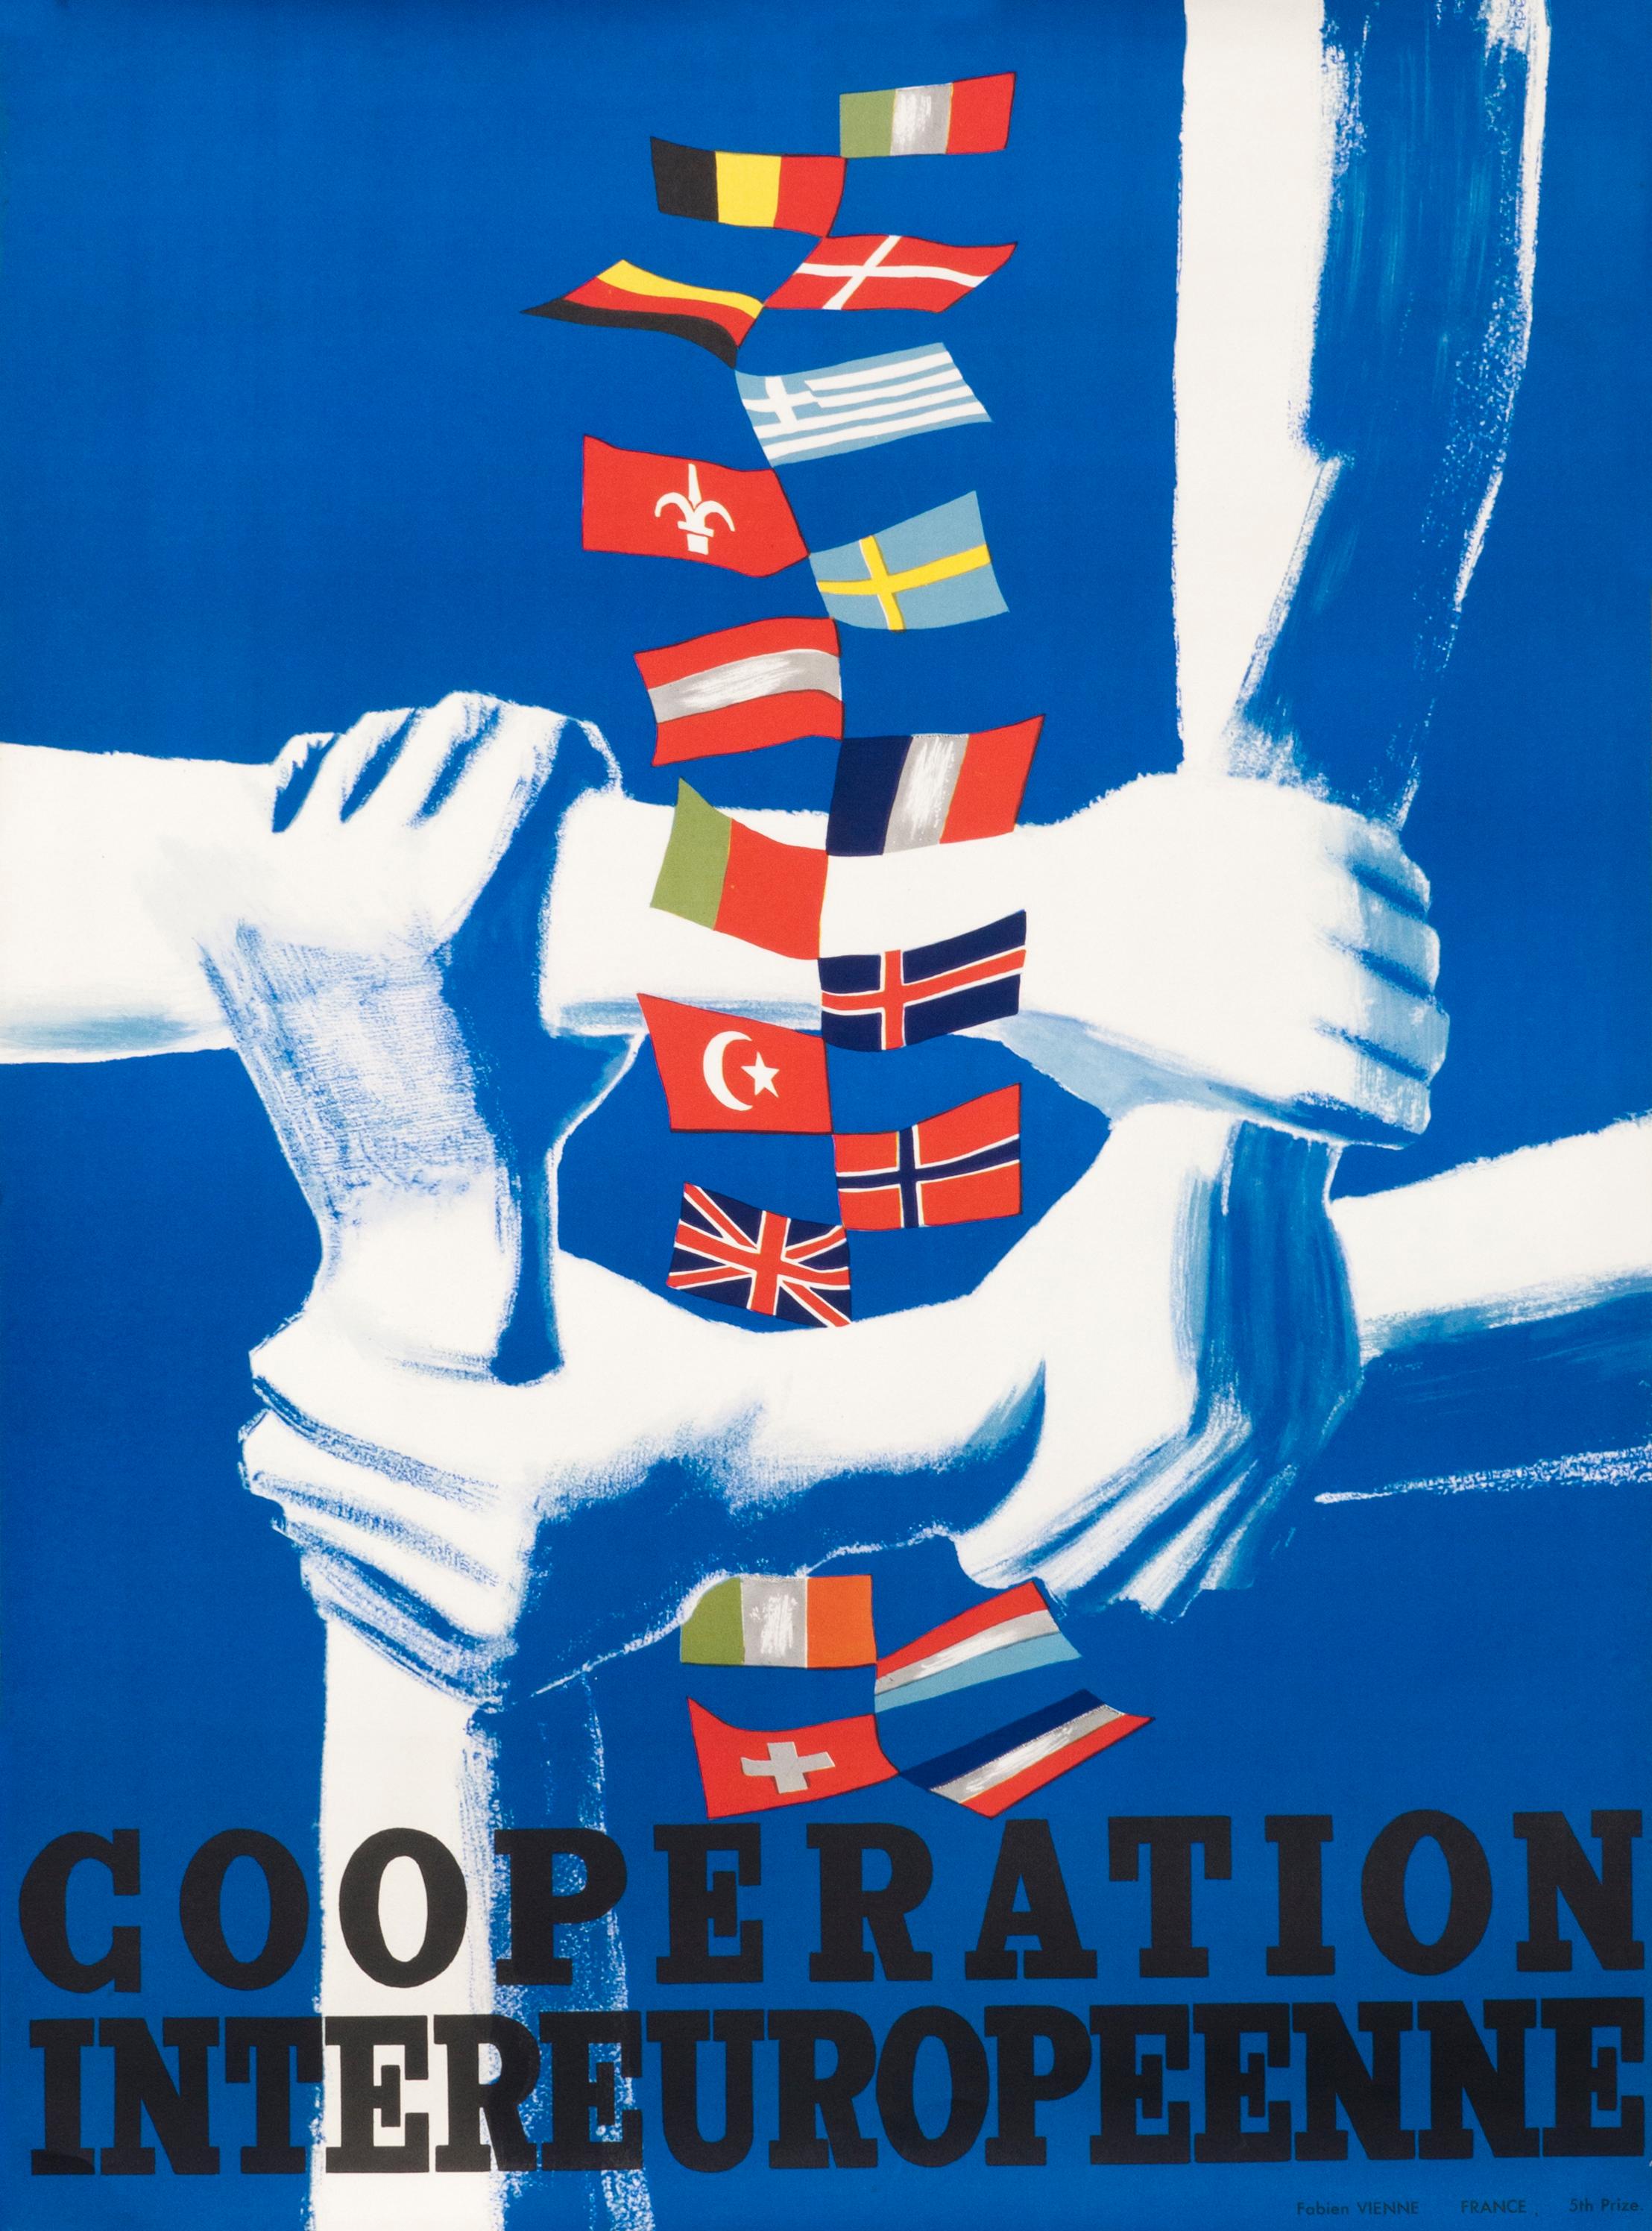 Fabien Vienne Figurative Print - "Cooperation Intereuropeenne" Marshall Plan Postwar Political Original Poster